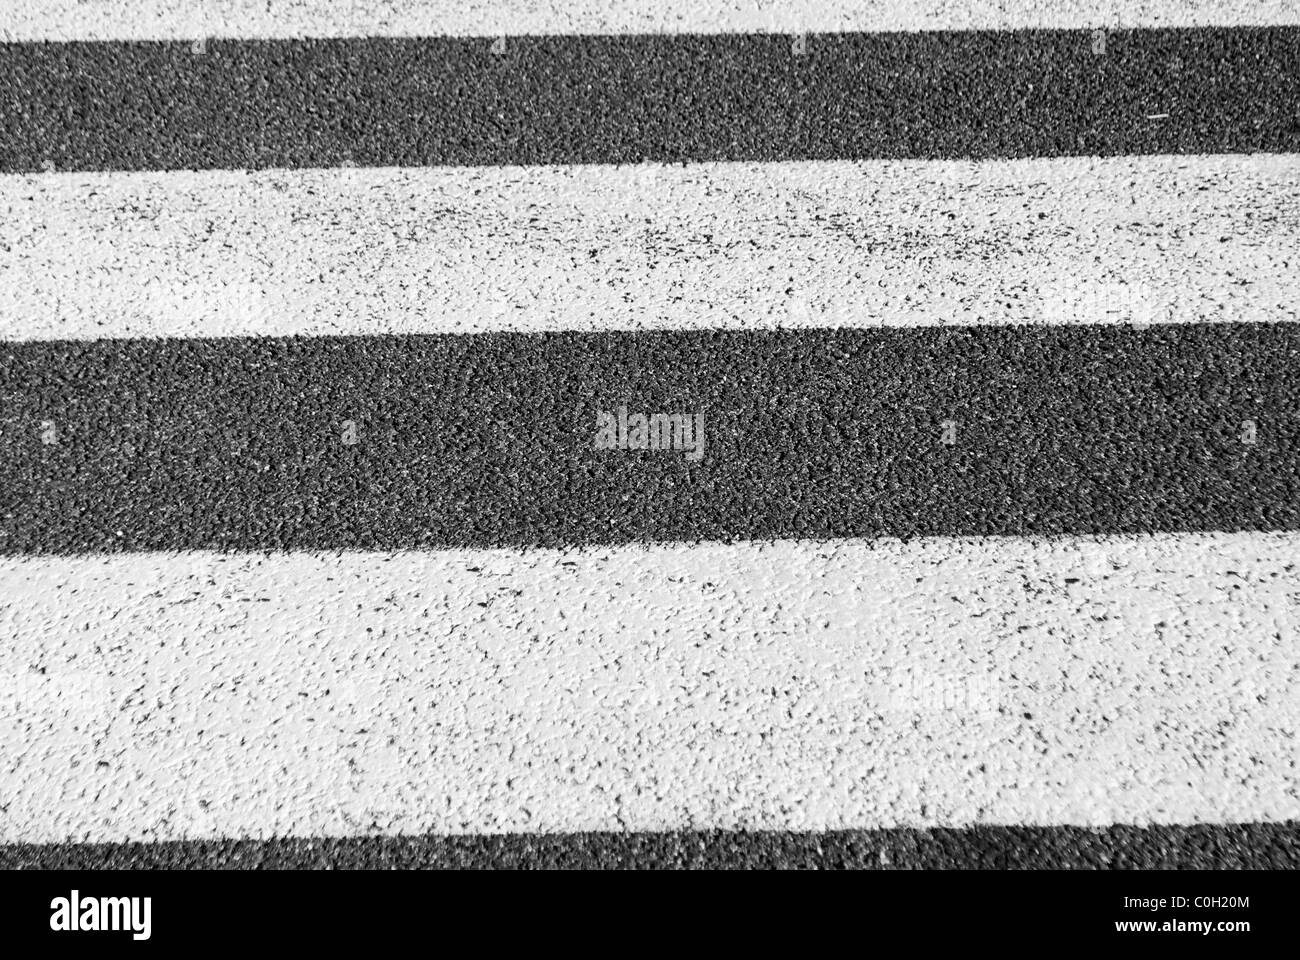 Zebrastreifen, weiß auf schwarzem asphalt Stockfoto